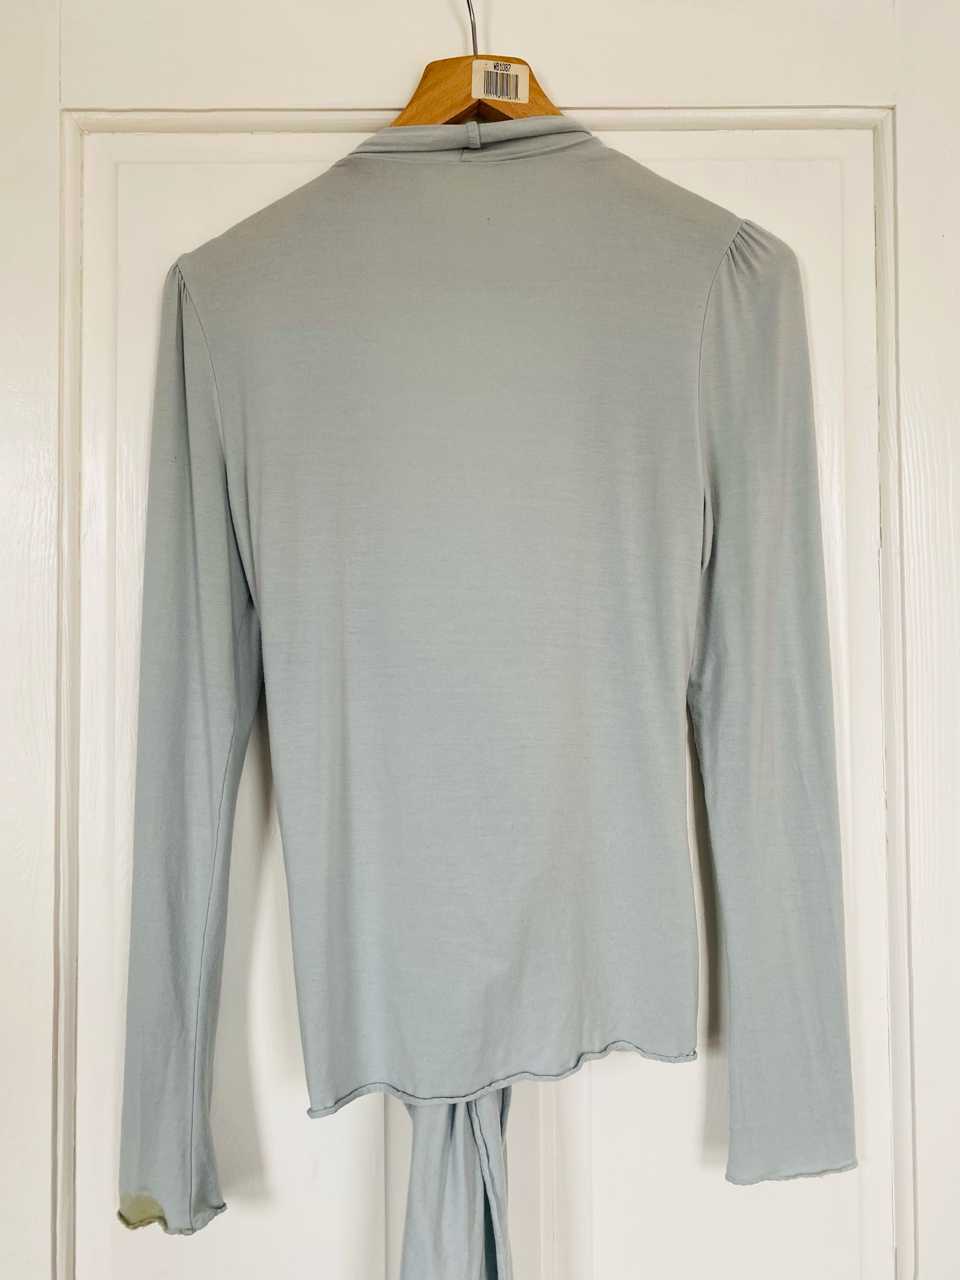 The Pyjama Room Jersey Drapy Shirt Jacket -  Cherchez La Femme brand